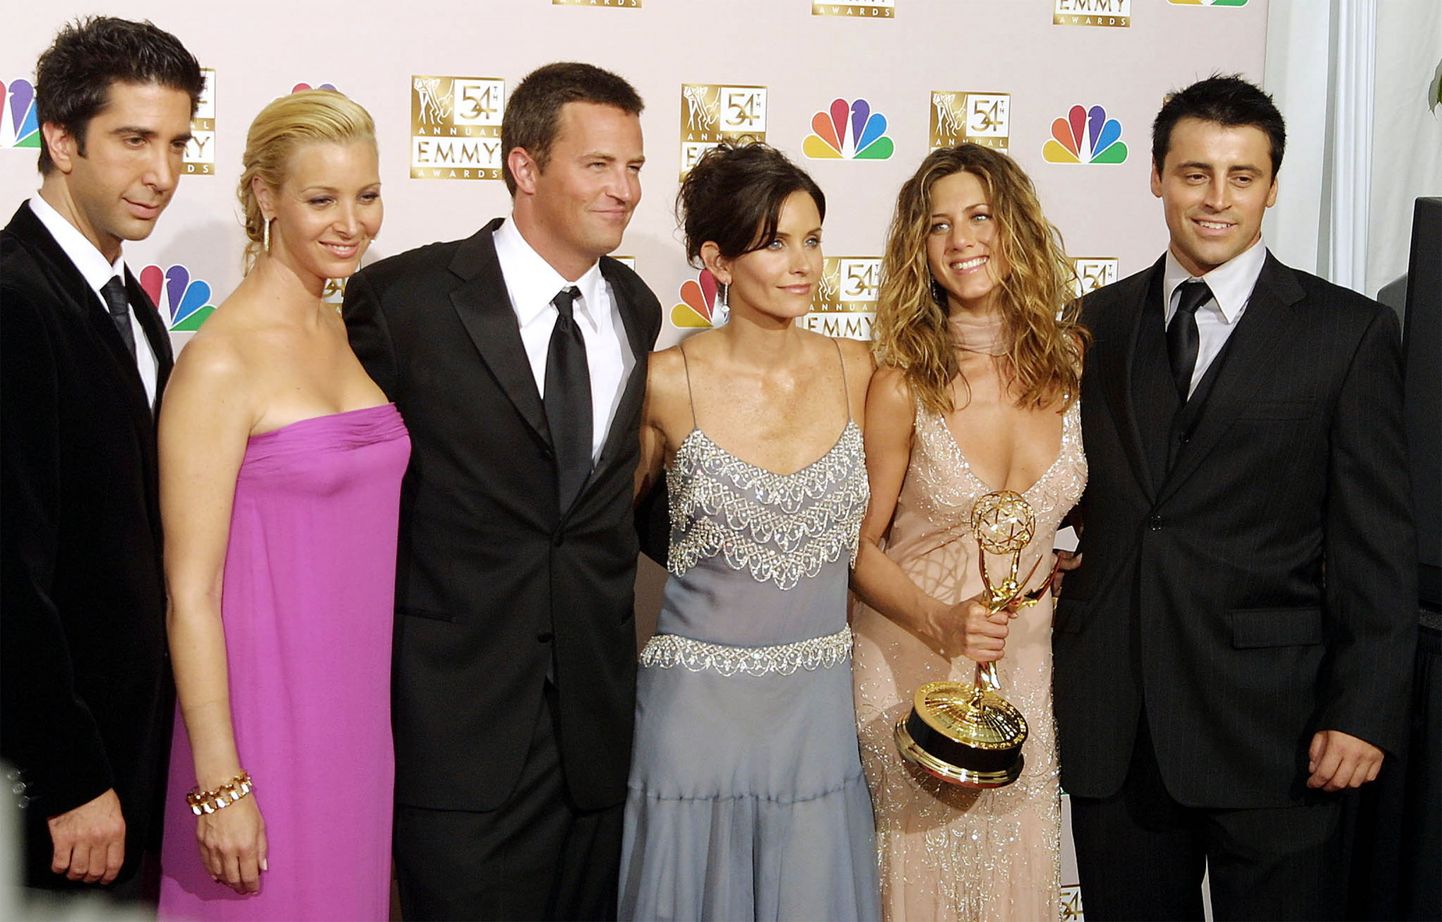 Seriaali "Sõbrad" näitlejad David Schwimmer, Lisa Kudrow, Mathew Perry, Courtney Cox Arquette, Jennifer Aniston ja Matt LeBlanc.